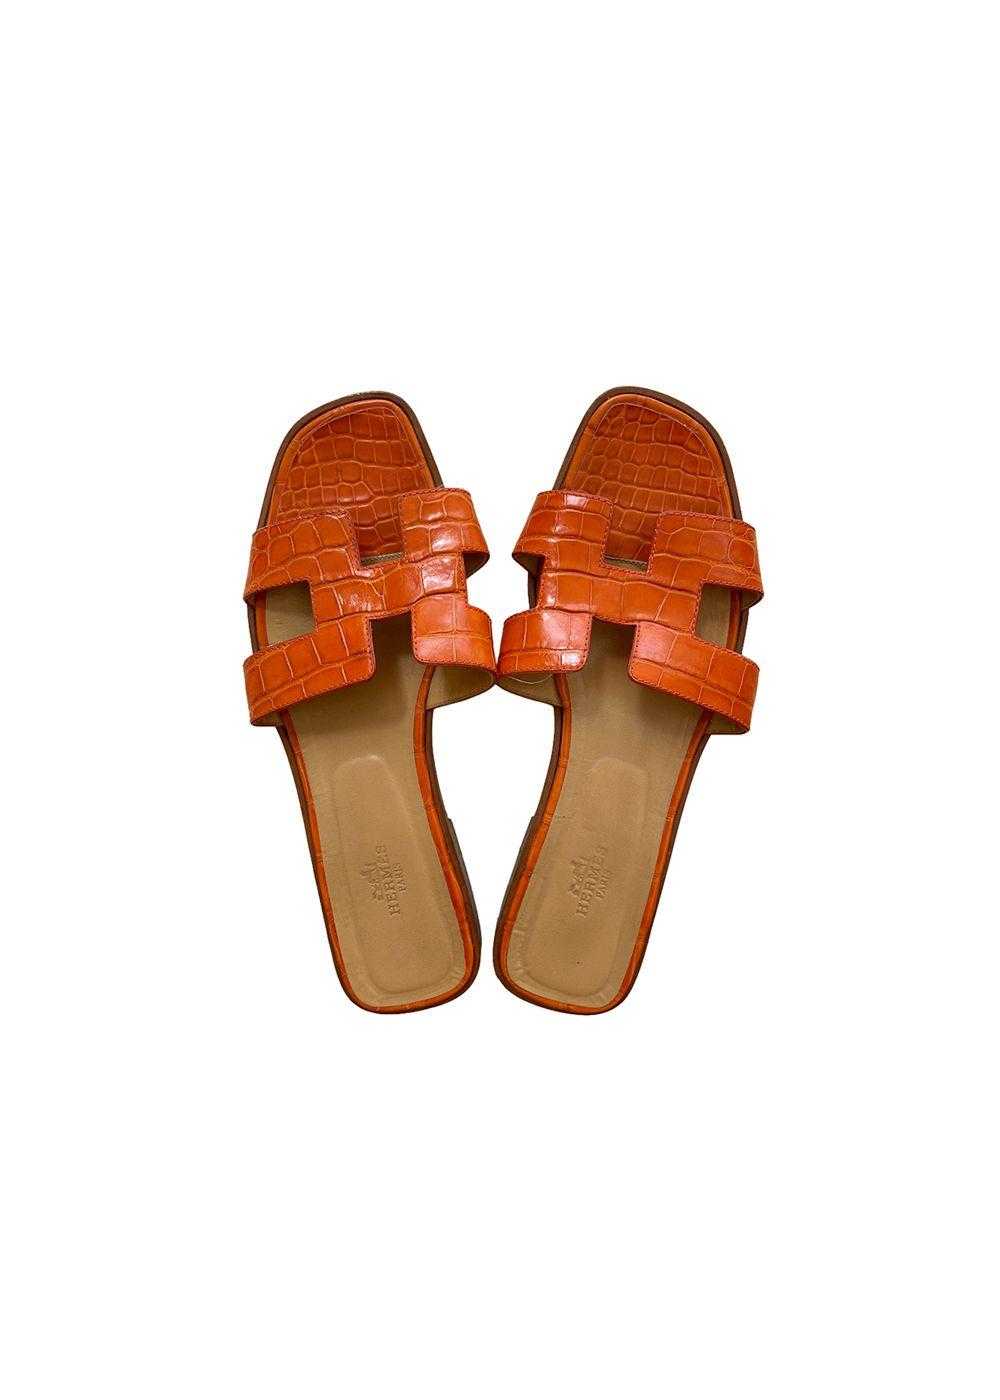 Hermes Orange Crocodile Leather Oran Sandals - image 2